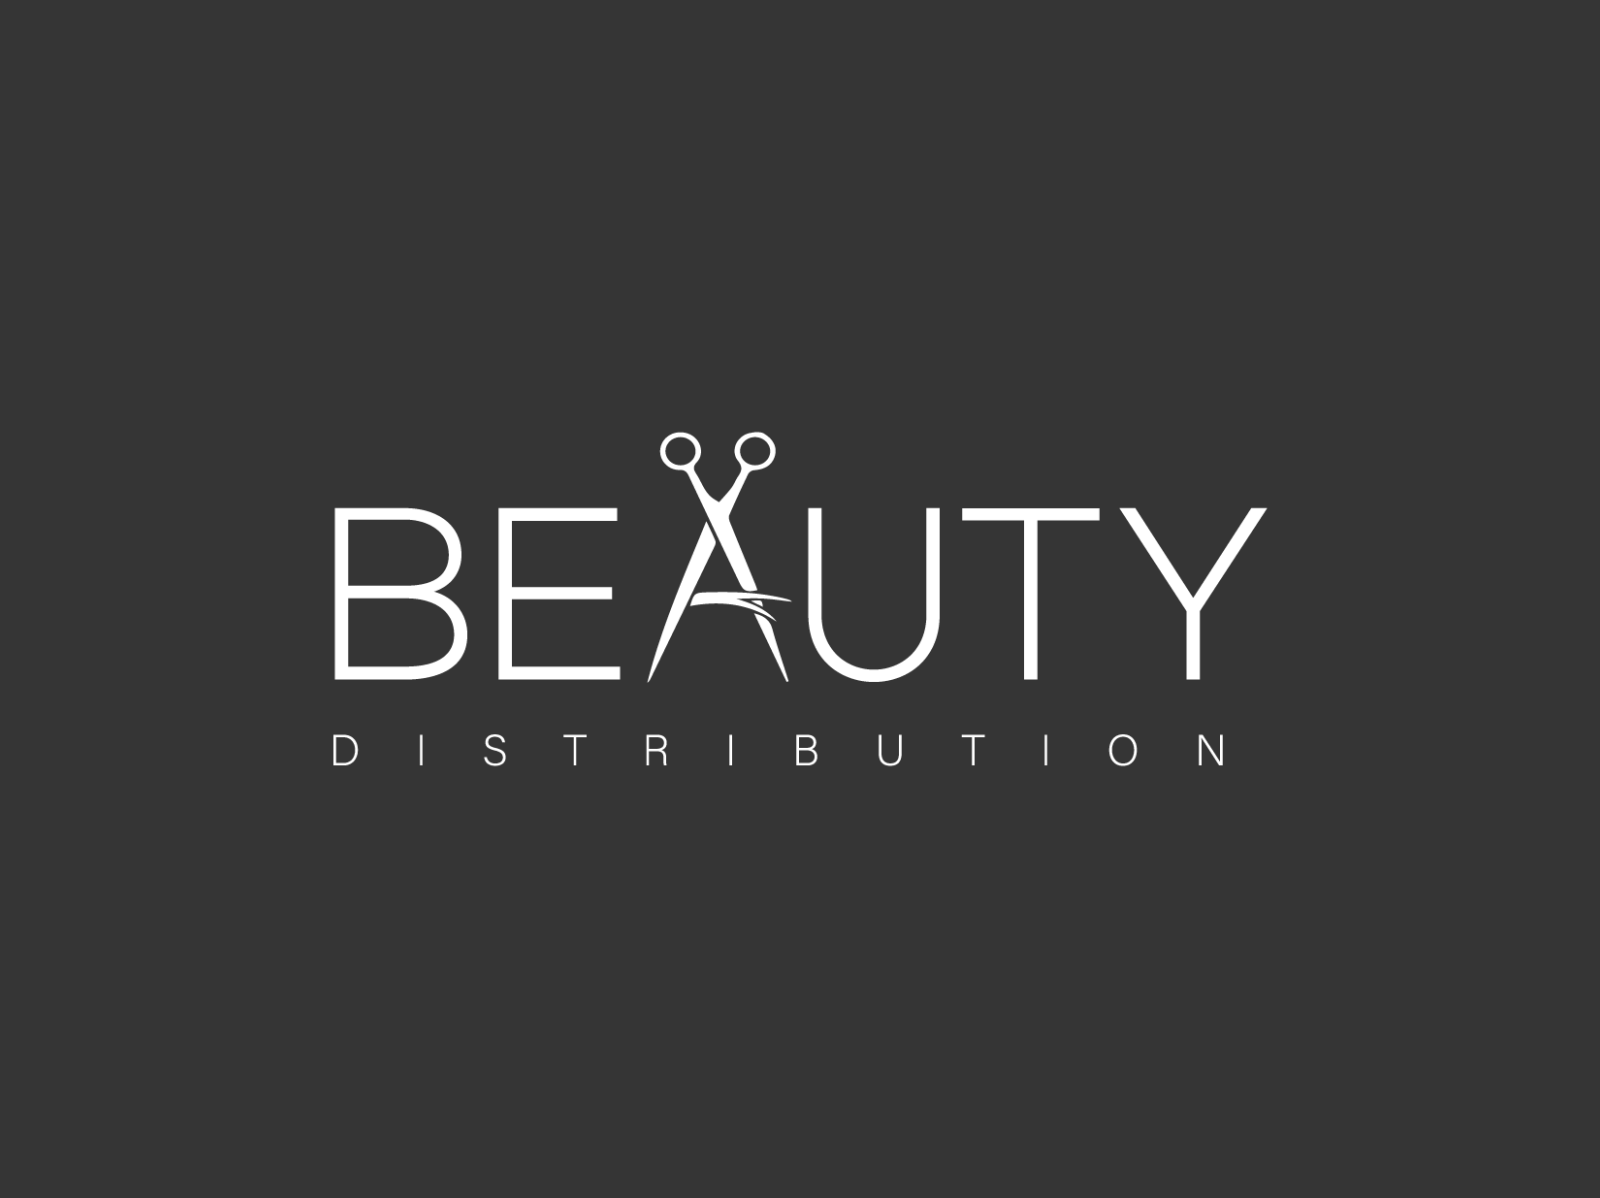 A professional, minimalist and flat beauty logo. by Istiak Ahmed on ...